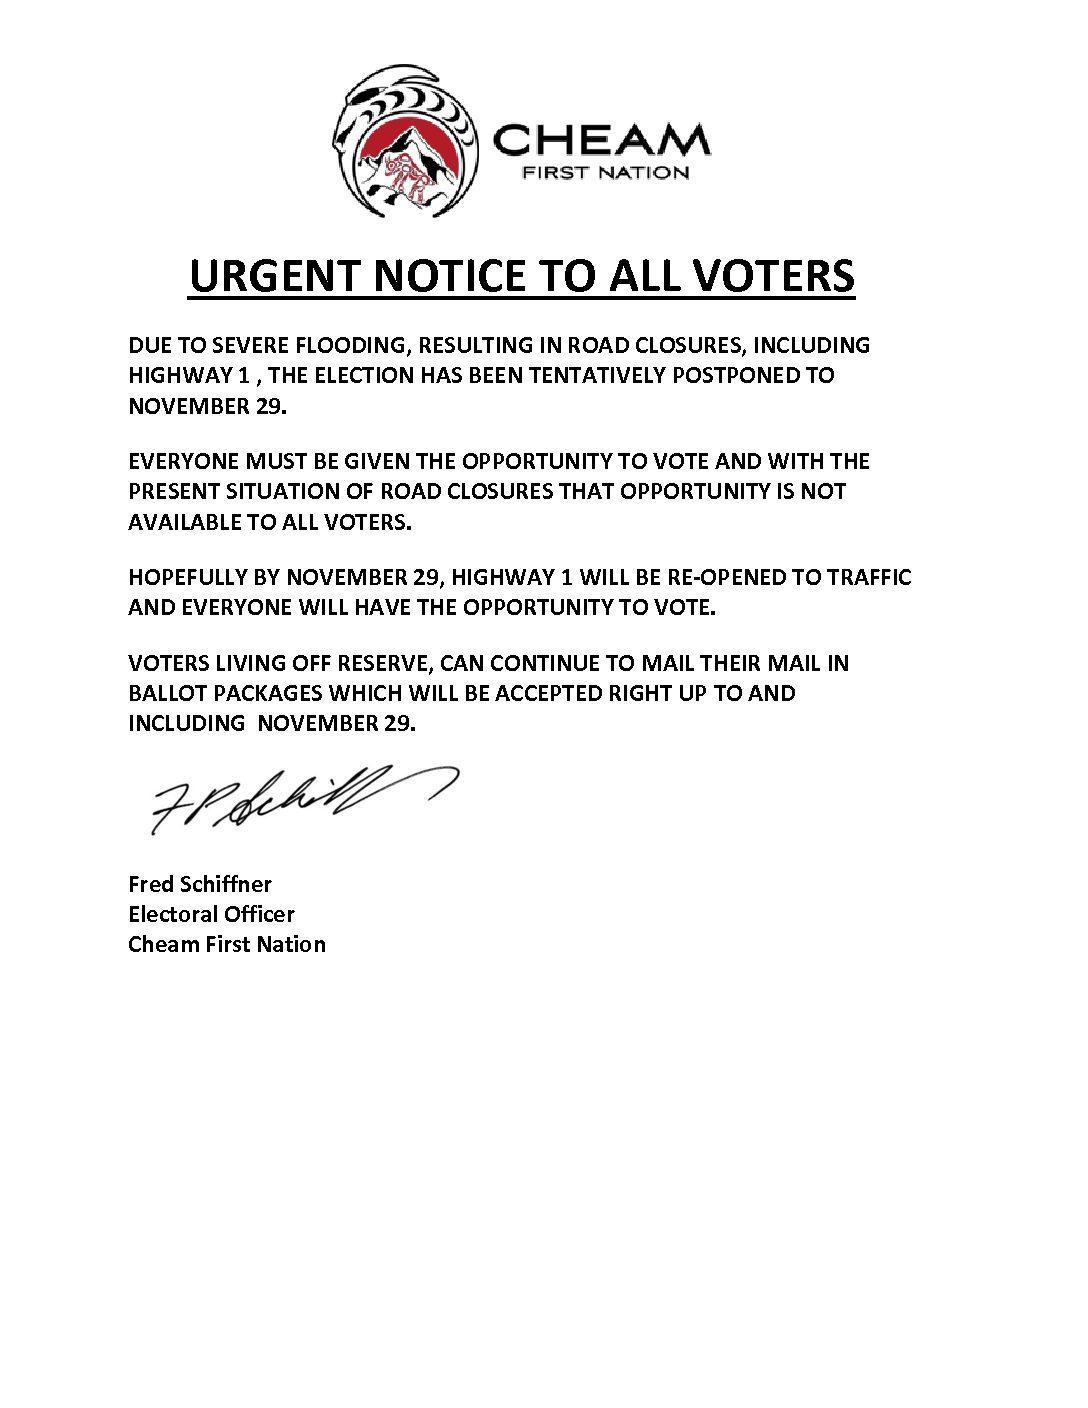 URGENT NOTICE: Election Postponed to November 29, 2021